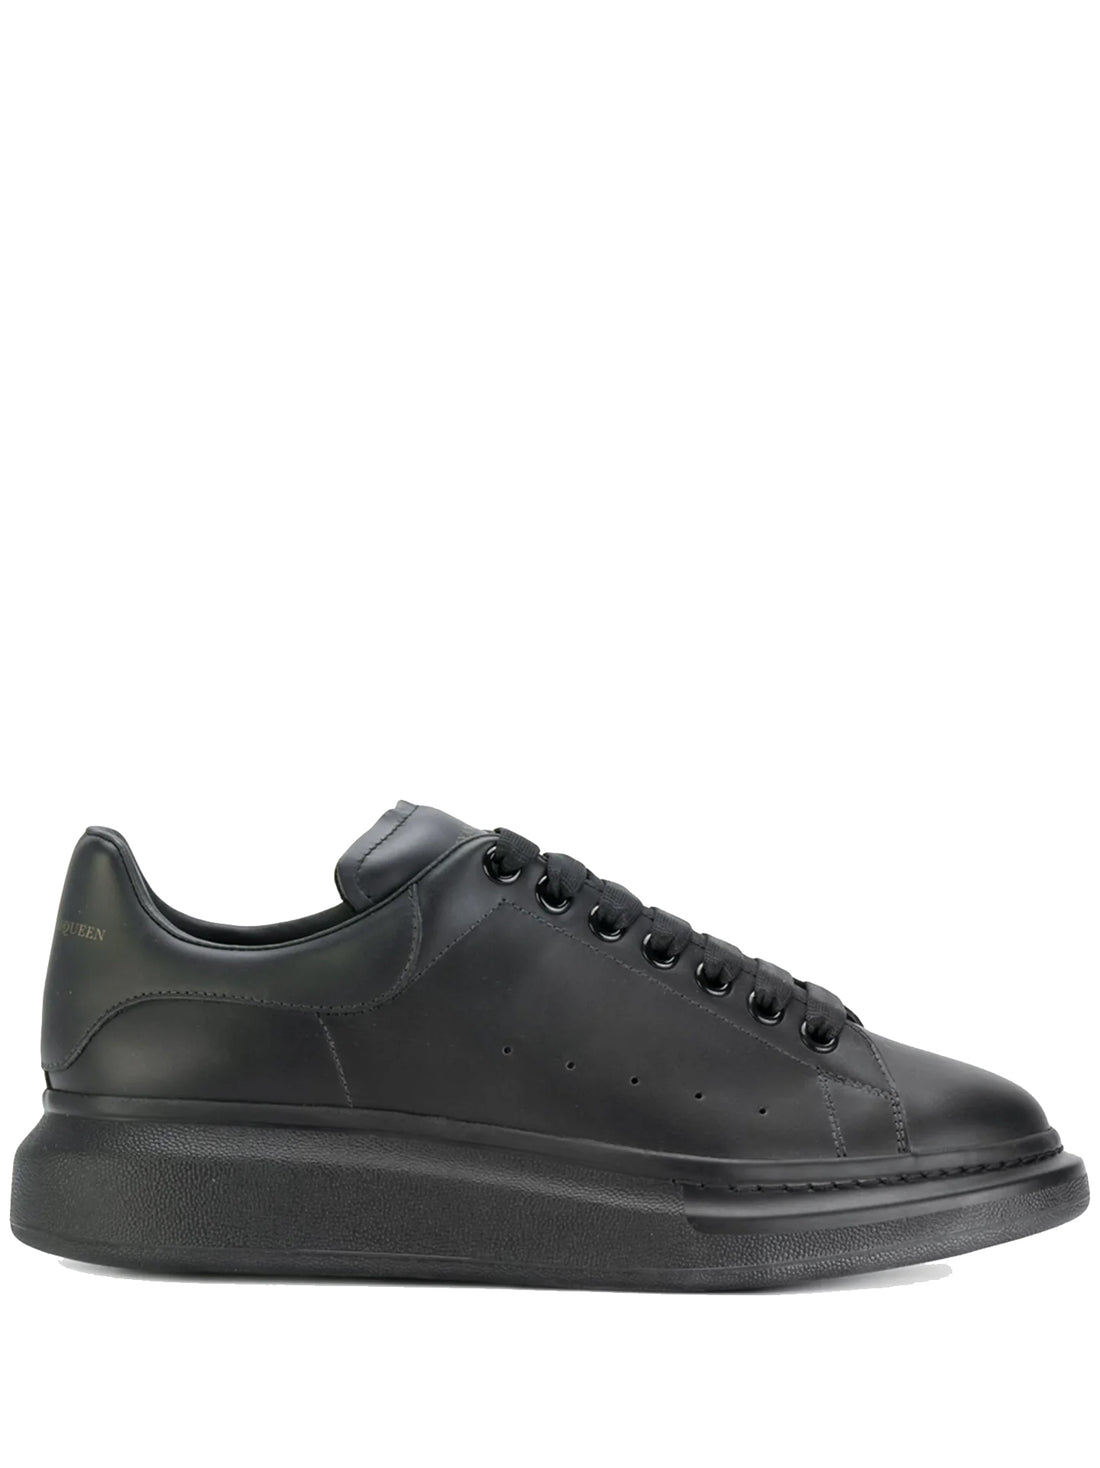 ALEXANDER MCQUEEN Oversized Sole Leather Sneakers Black/Black - MAISONDEFASHION.COM